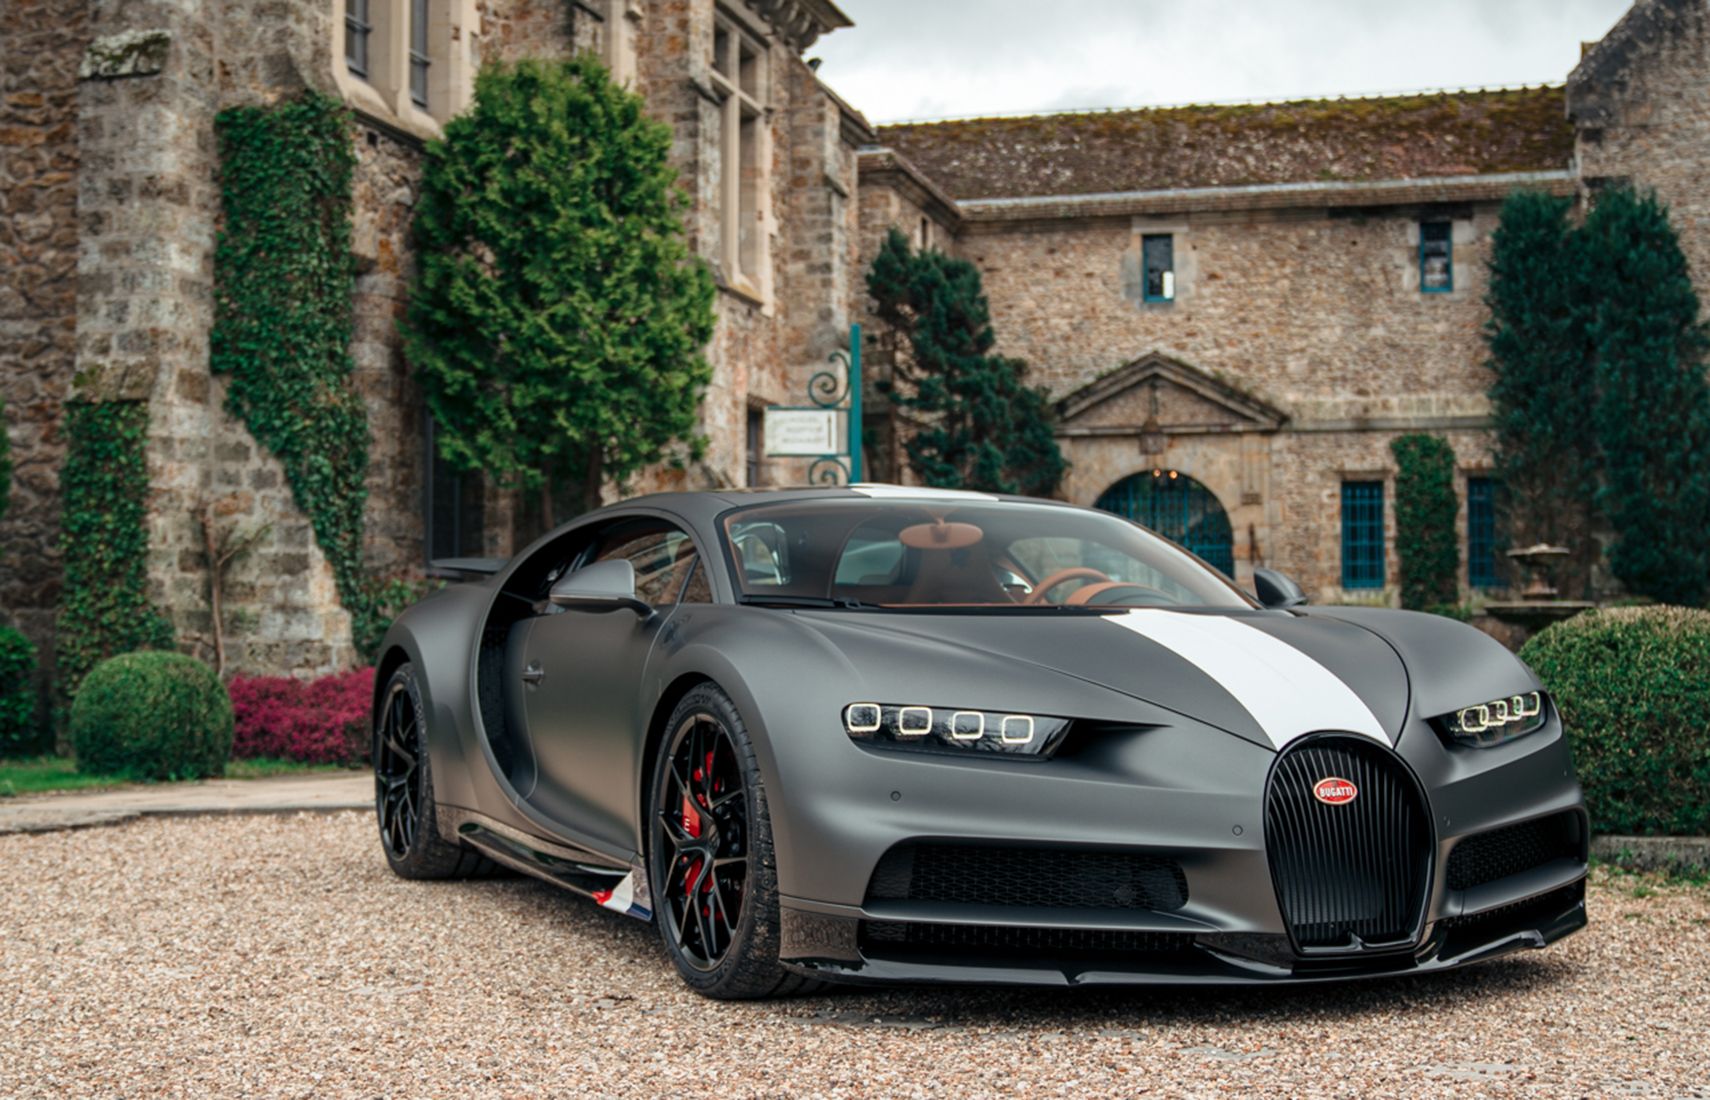 Bugatti Paris front